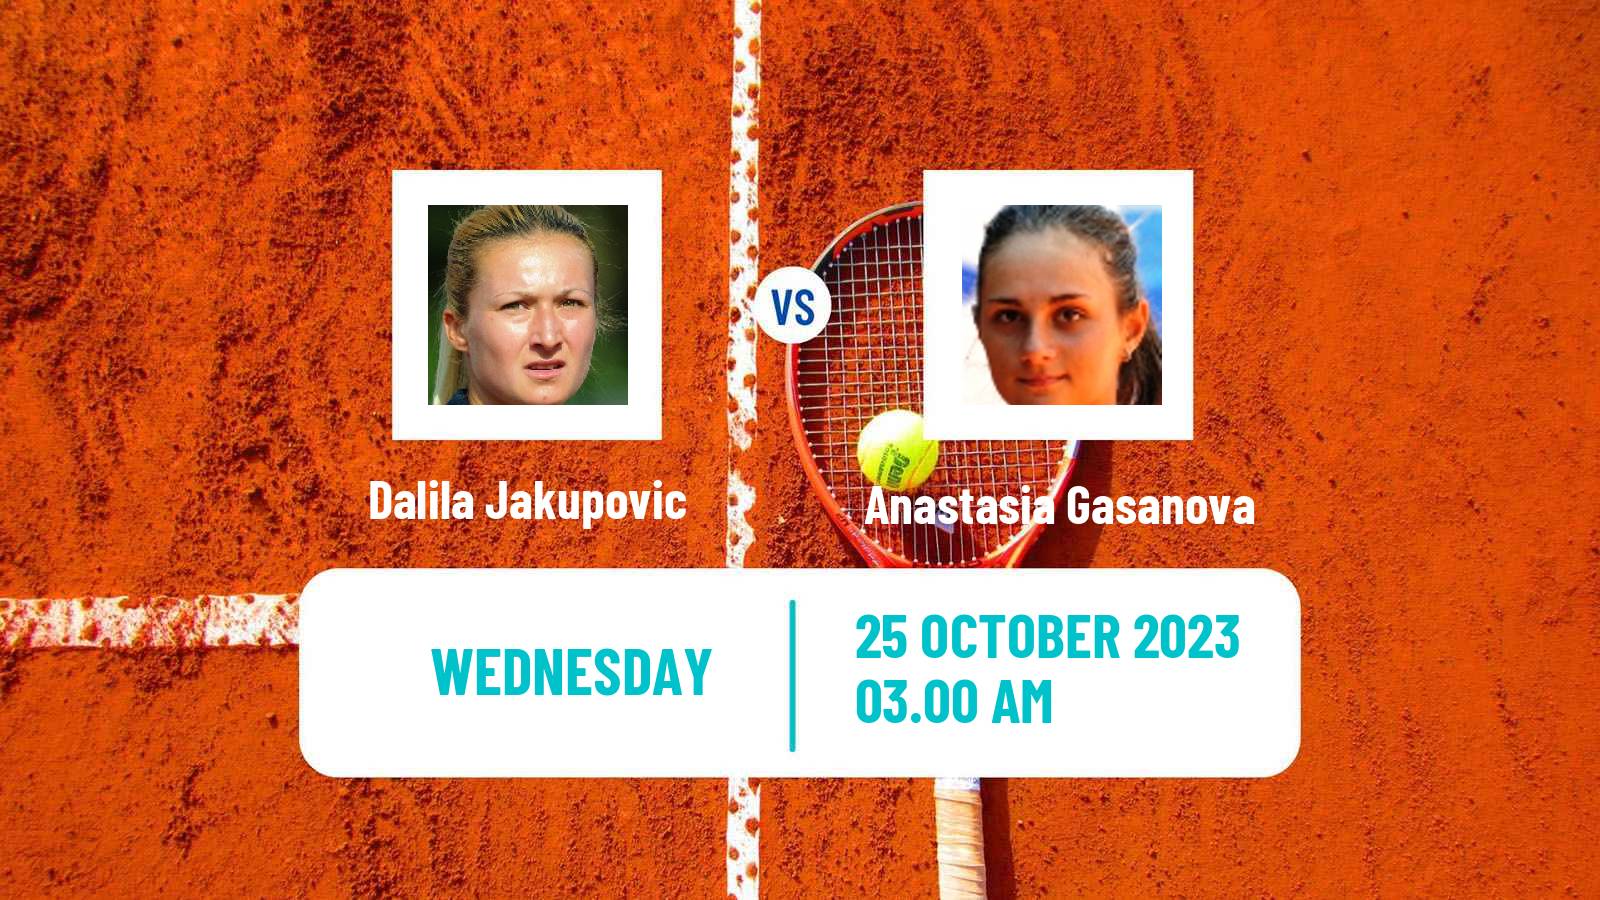 Tennis ITF W25 Istanbul Women Dalila Jakupovic - Anastasia Gasanova